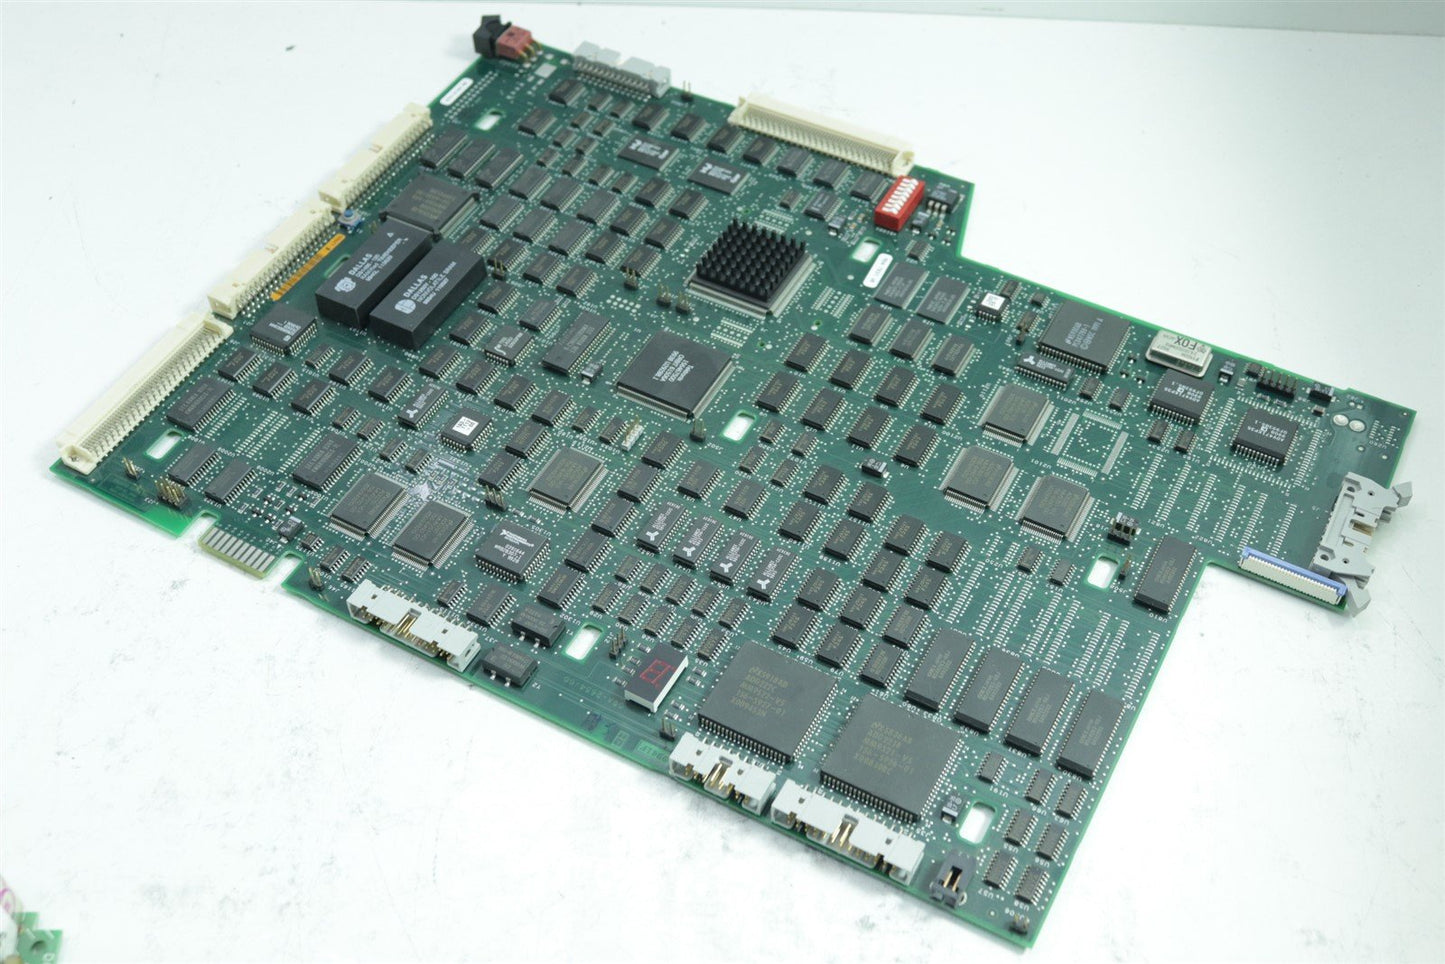 Tektronix OSCILLOSCOPE TDS-540D Circuit Board 679-4199-00 Tested